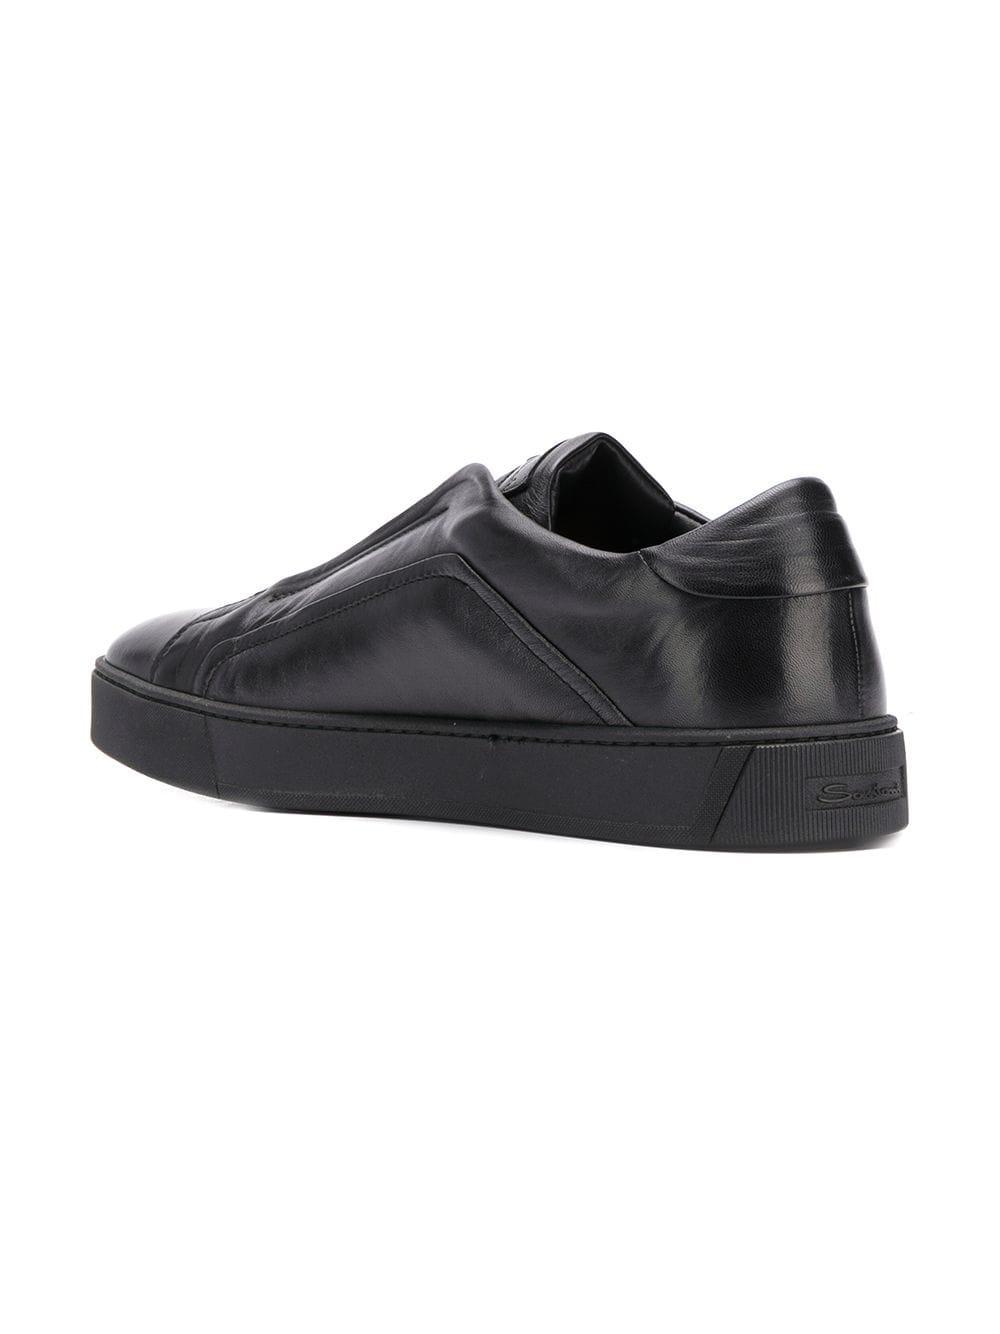 Santoni Leather Laceless Low Sneakers in Black for Men - Lyst